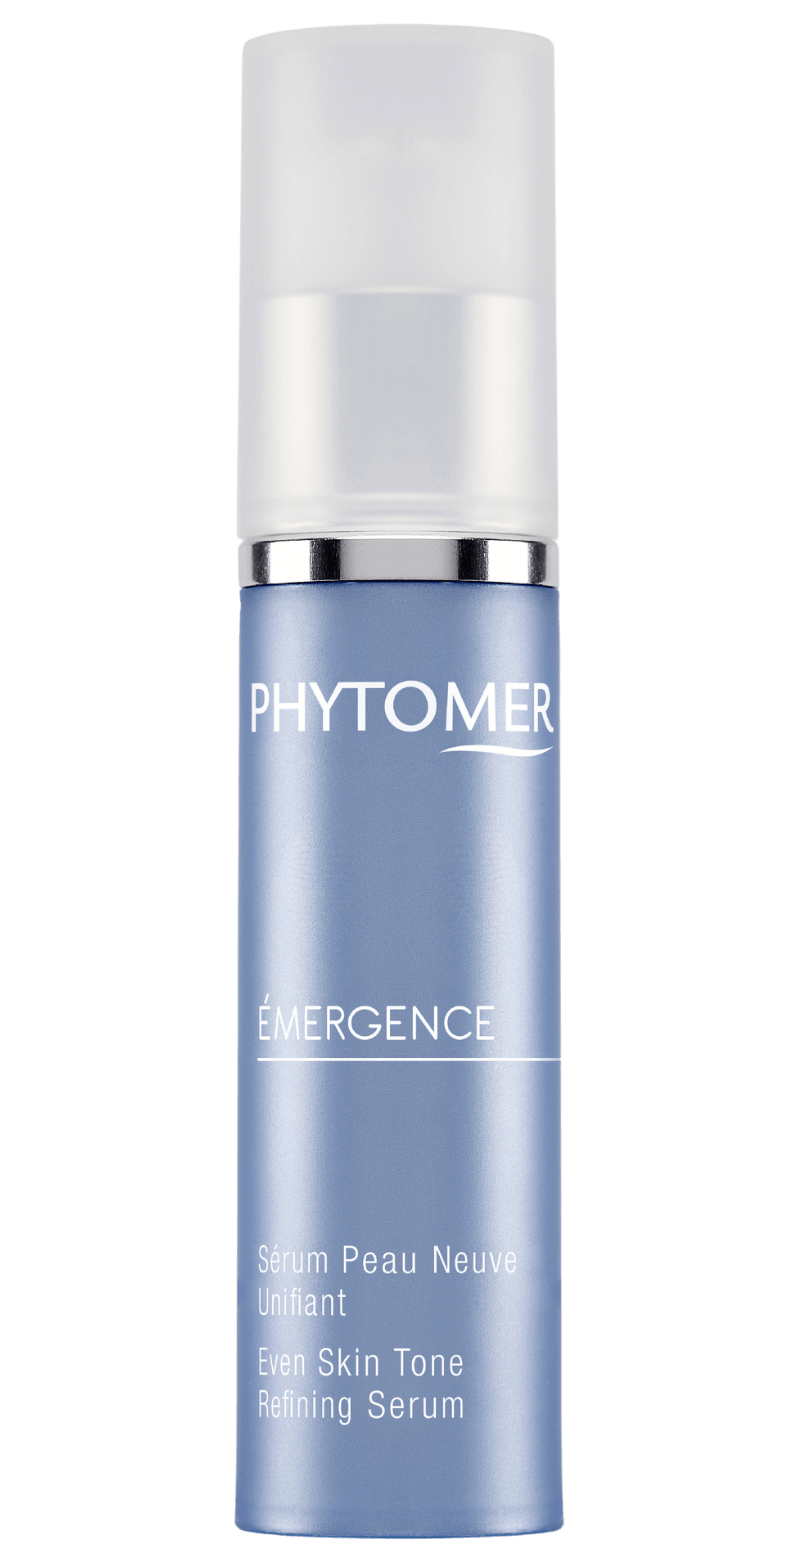 's Phytomer EMERGENCE Even Skin Tone Refining Serum - Bellini's Skin and Parfumerie 